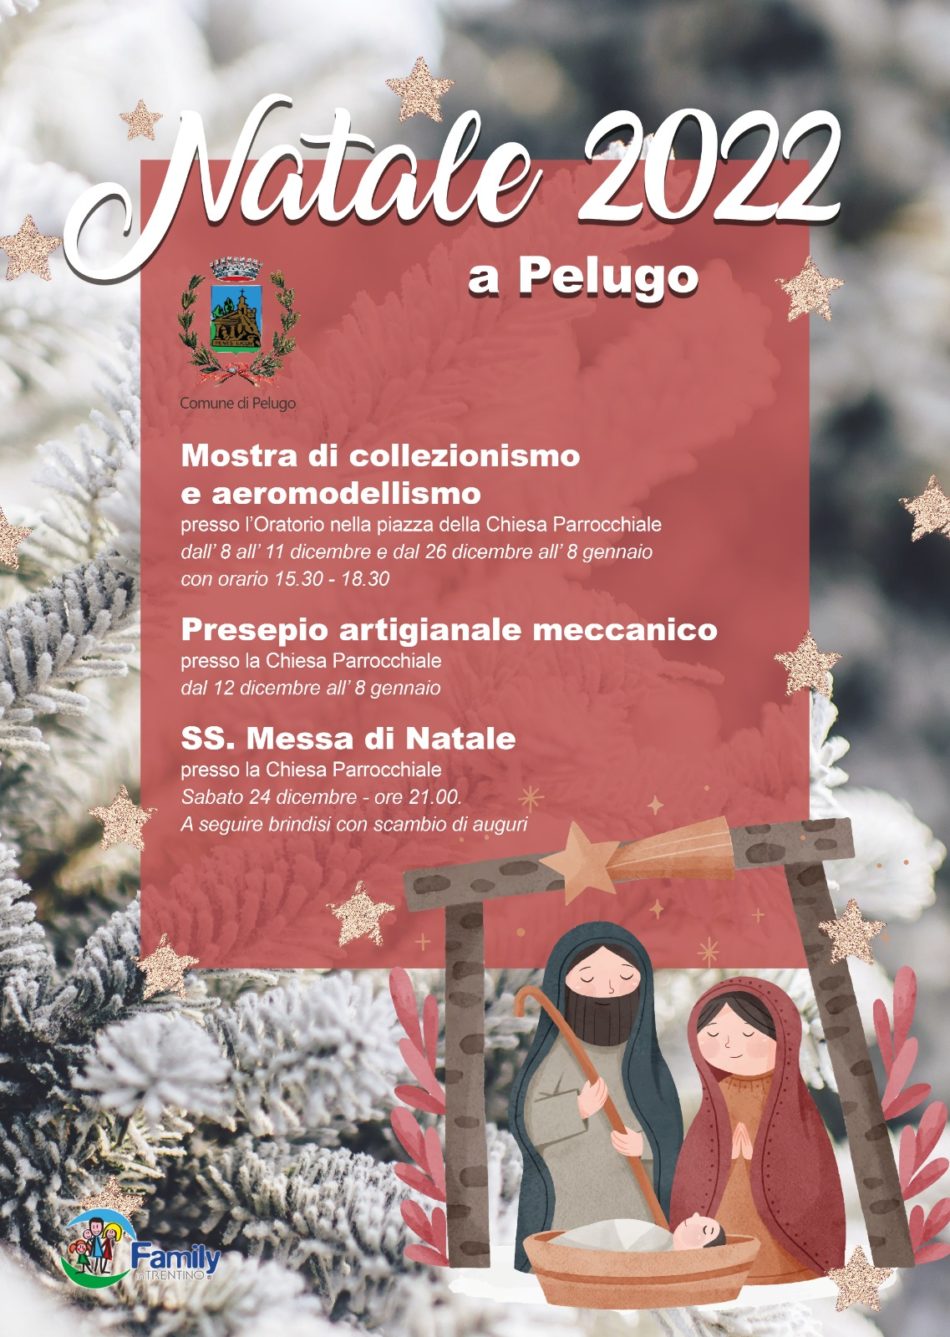 Natale 2022 a Pelugo